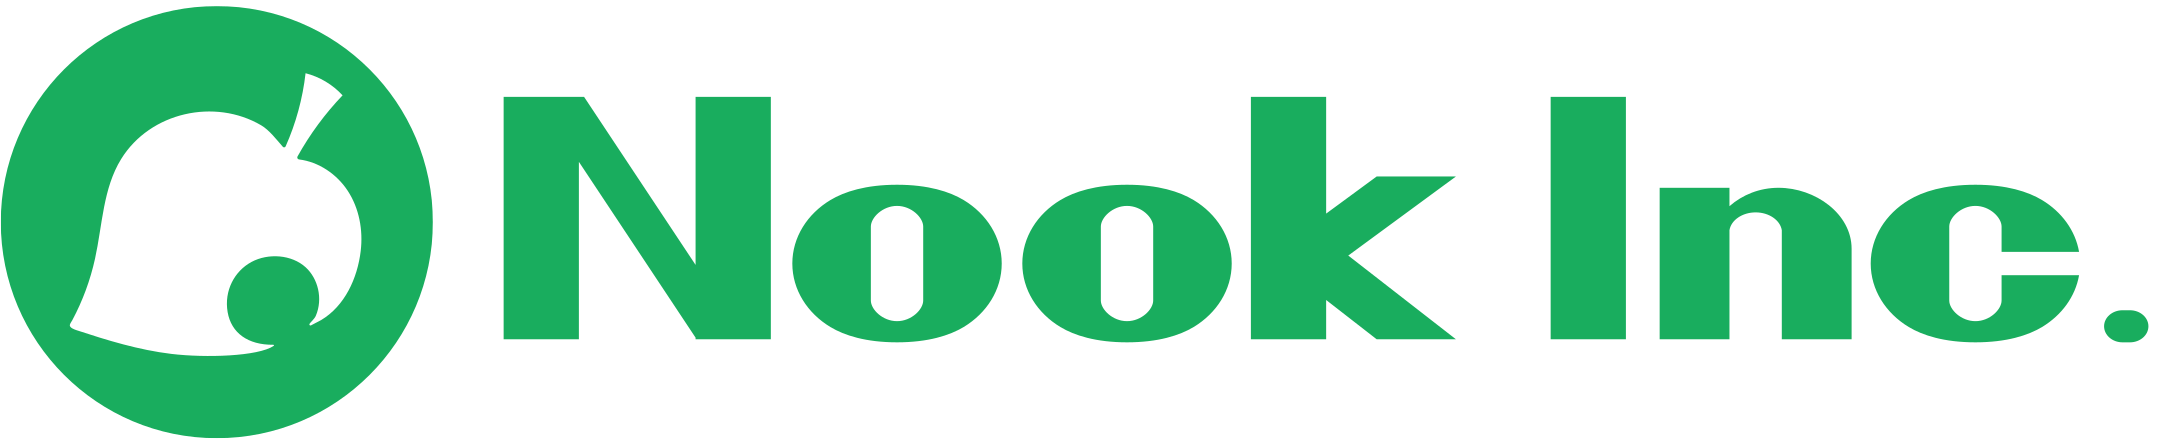 Nook Inc. Logo.png